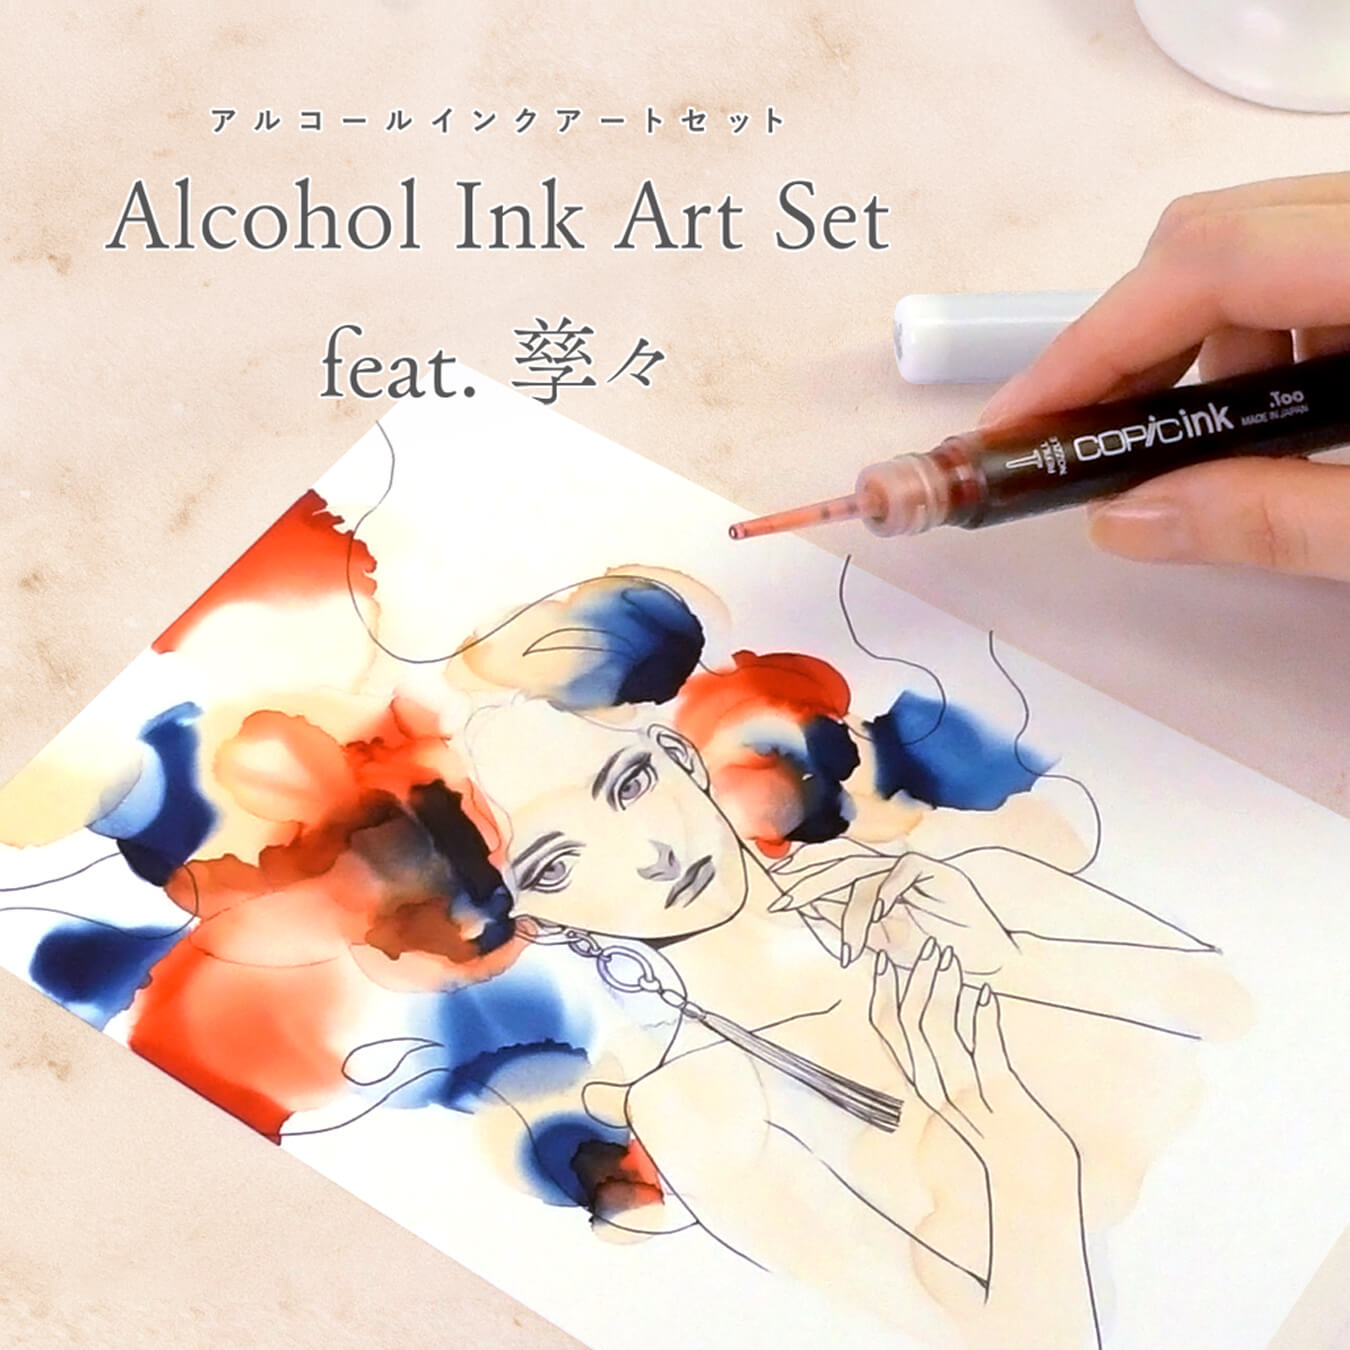 Alcohol Ink Art Set feat. 孳々 - コピック公式サイト